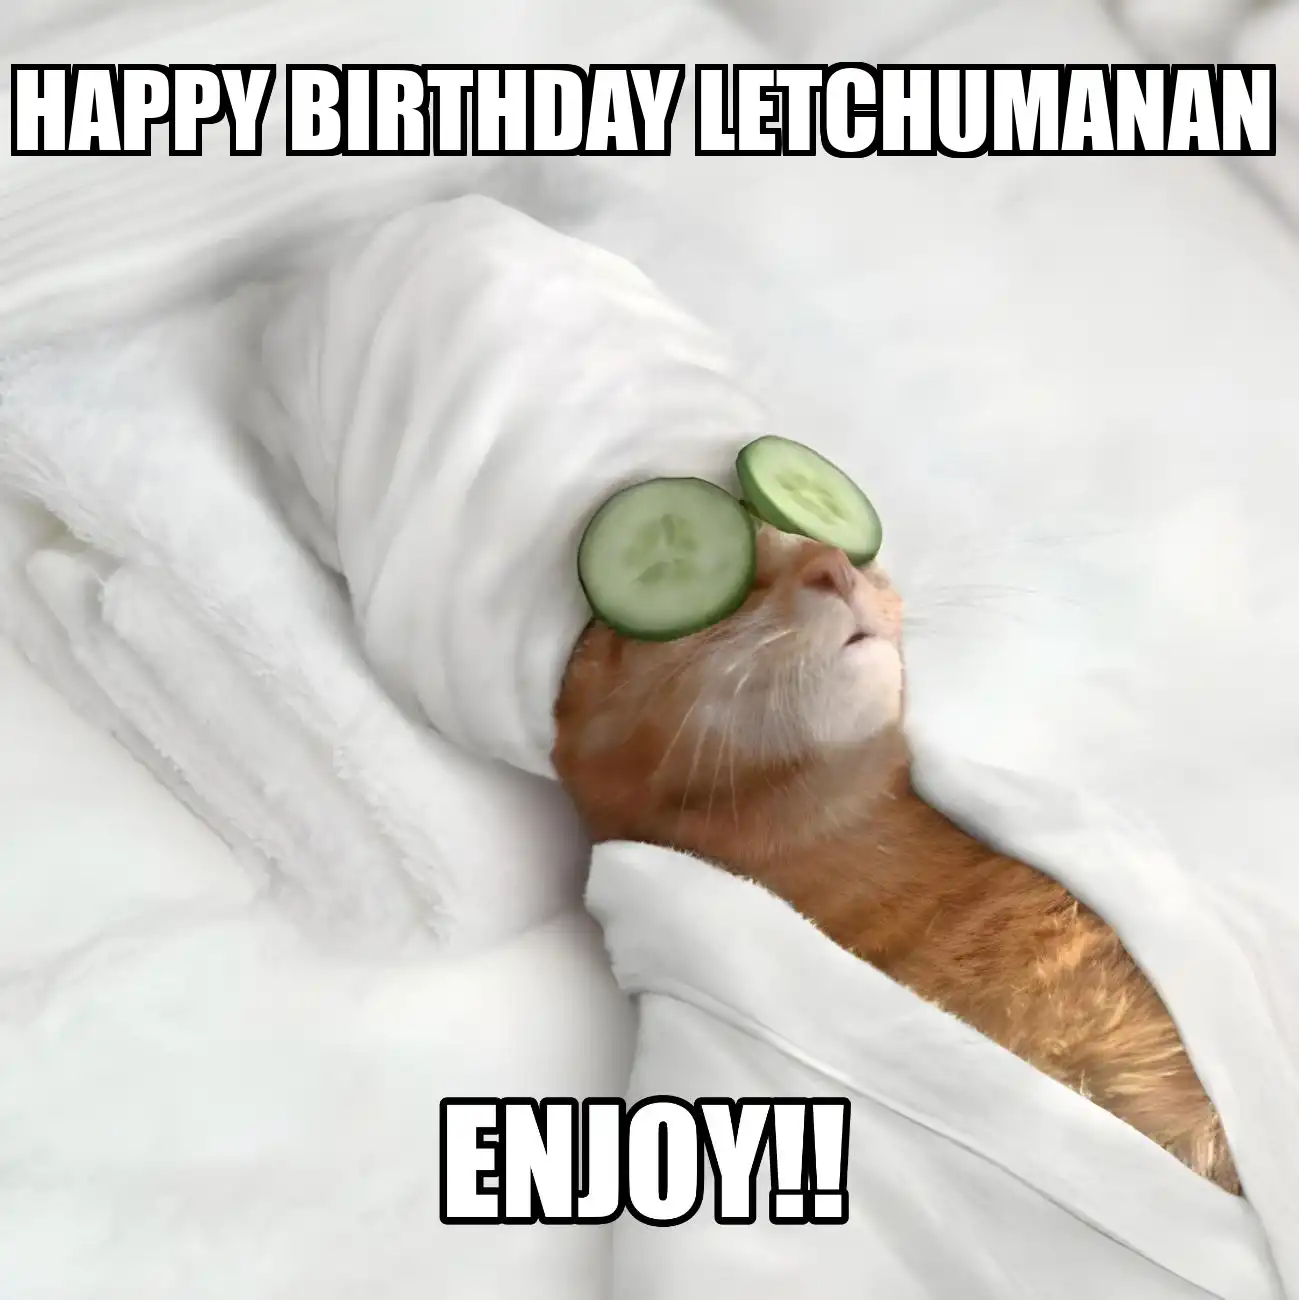 Happy Birthday Letchumanan Enjoy Cat Meme